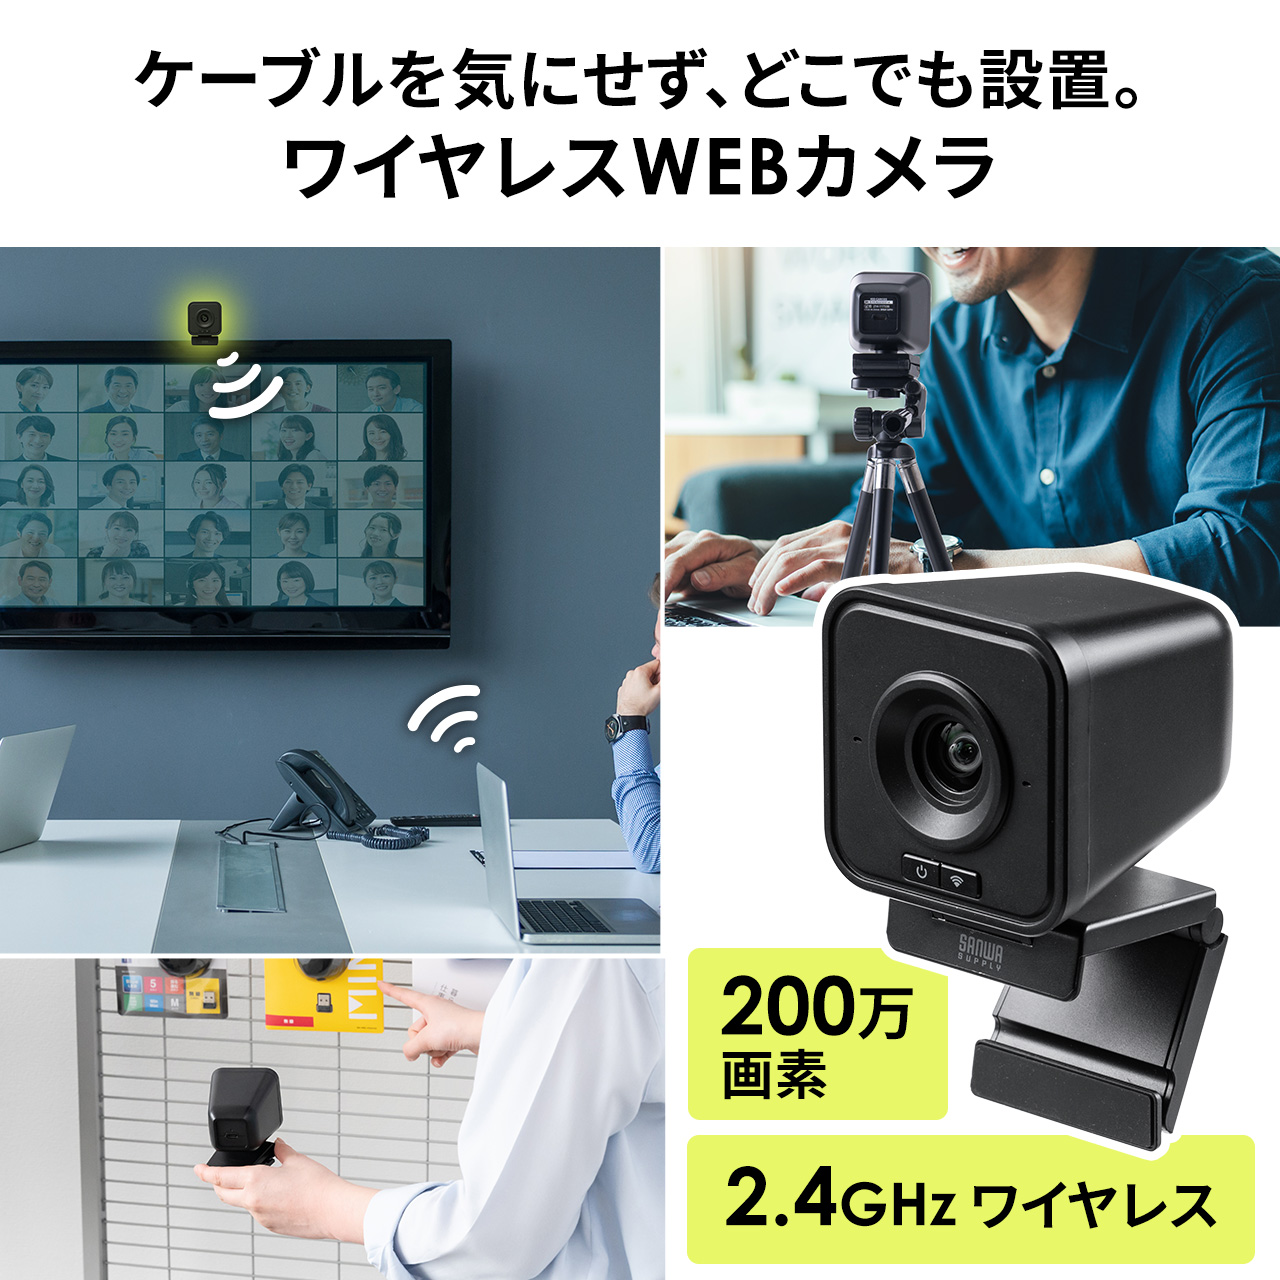 WEBカメラ ワイヤレス 無線接続 広角レンズ搭載 2.4GHz フルHD 200万